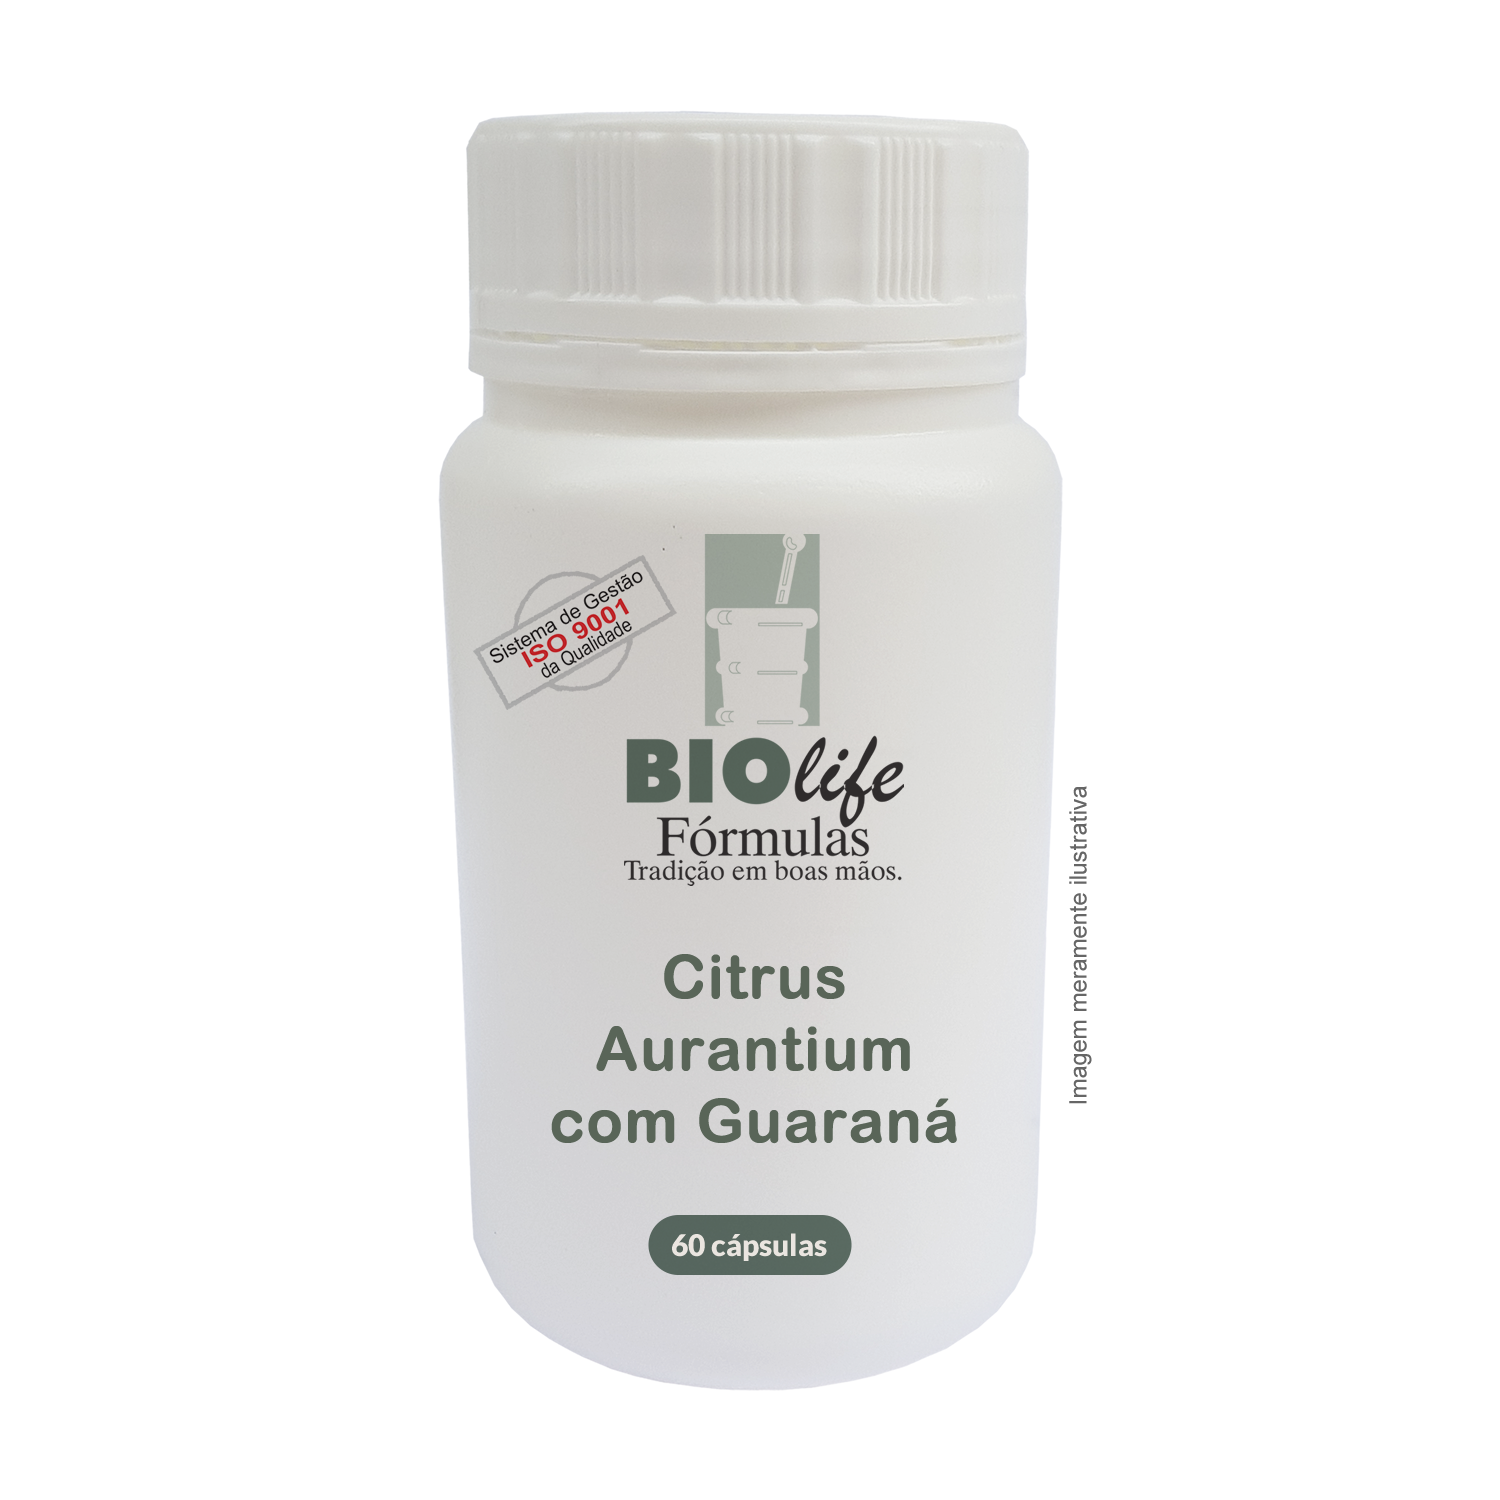 Citrus Aurantium - Dietas, Exercicios Físicos, Energértico, Termogênico - BioLife